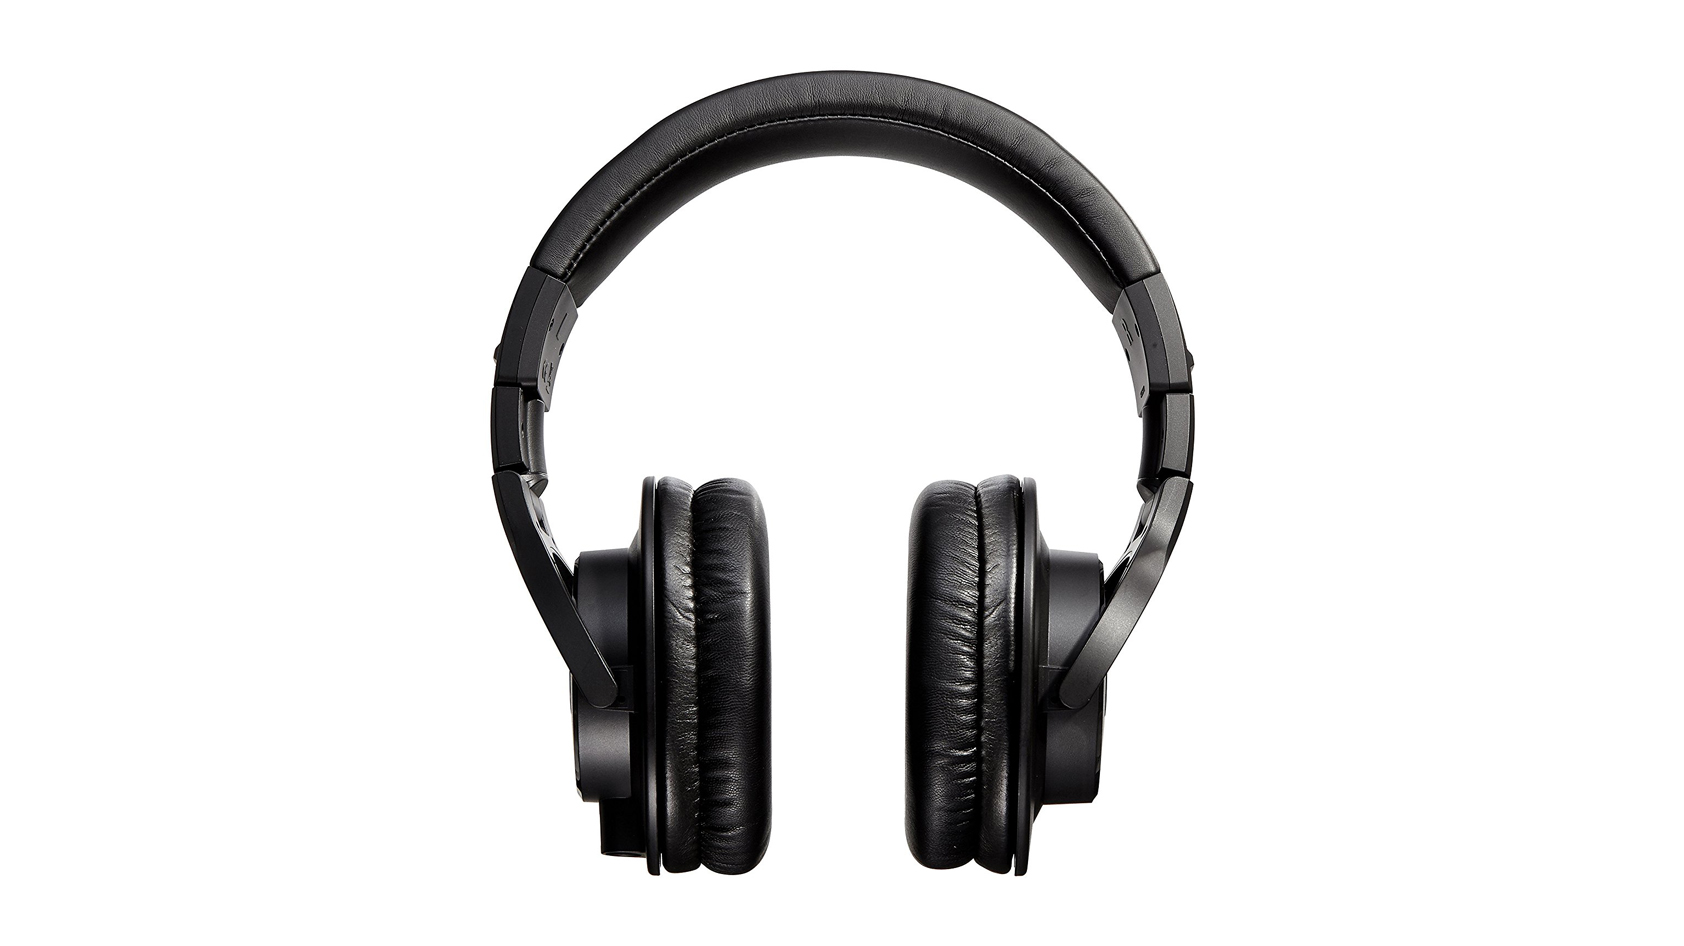 The Audio-Technica ATH-M40x studio headphones in black against a white background.